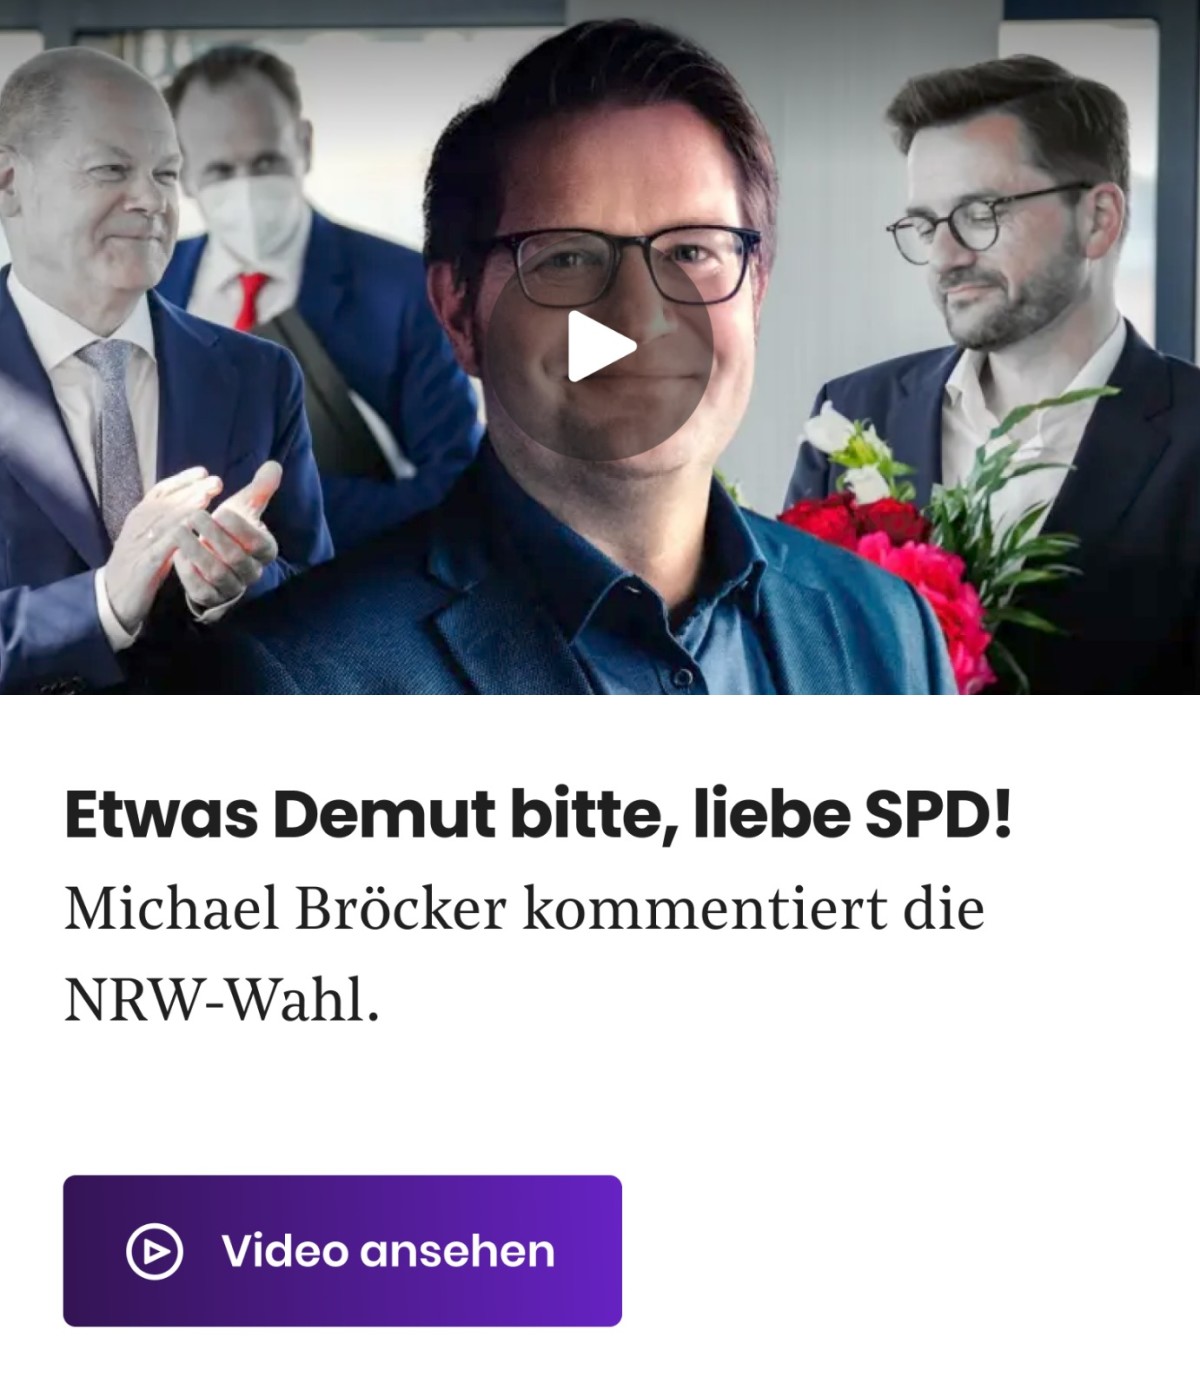 20220517-ec-mediapioneer-Etwas Demut bitte, liebe SPD!